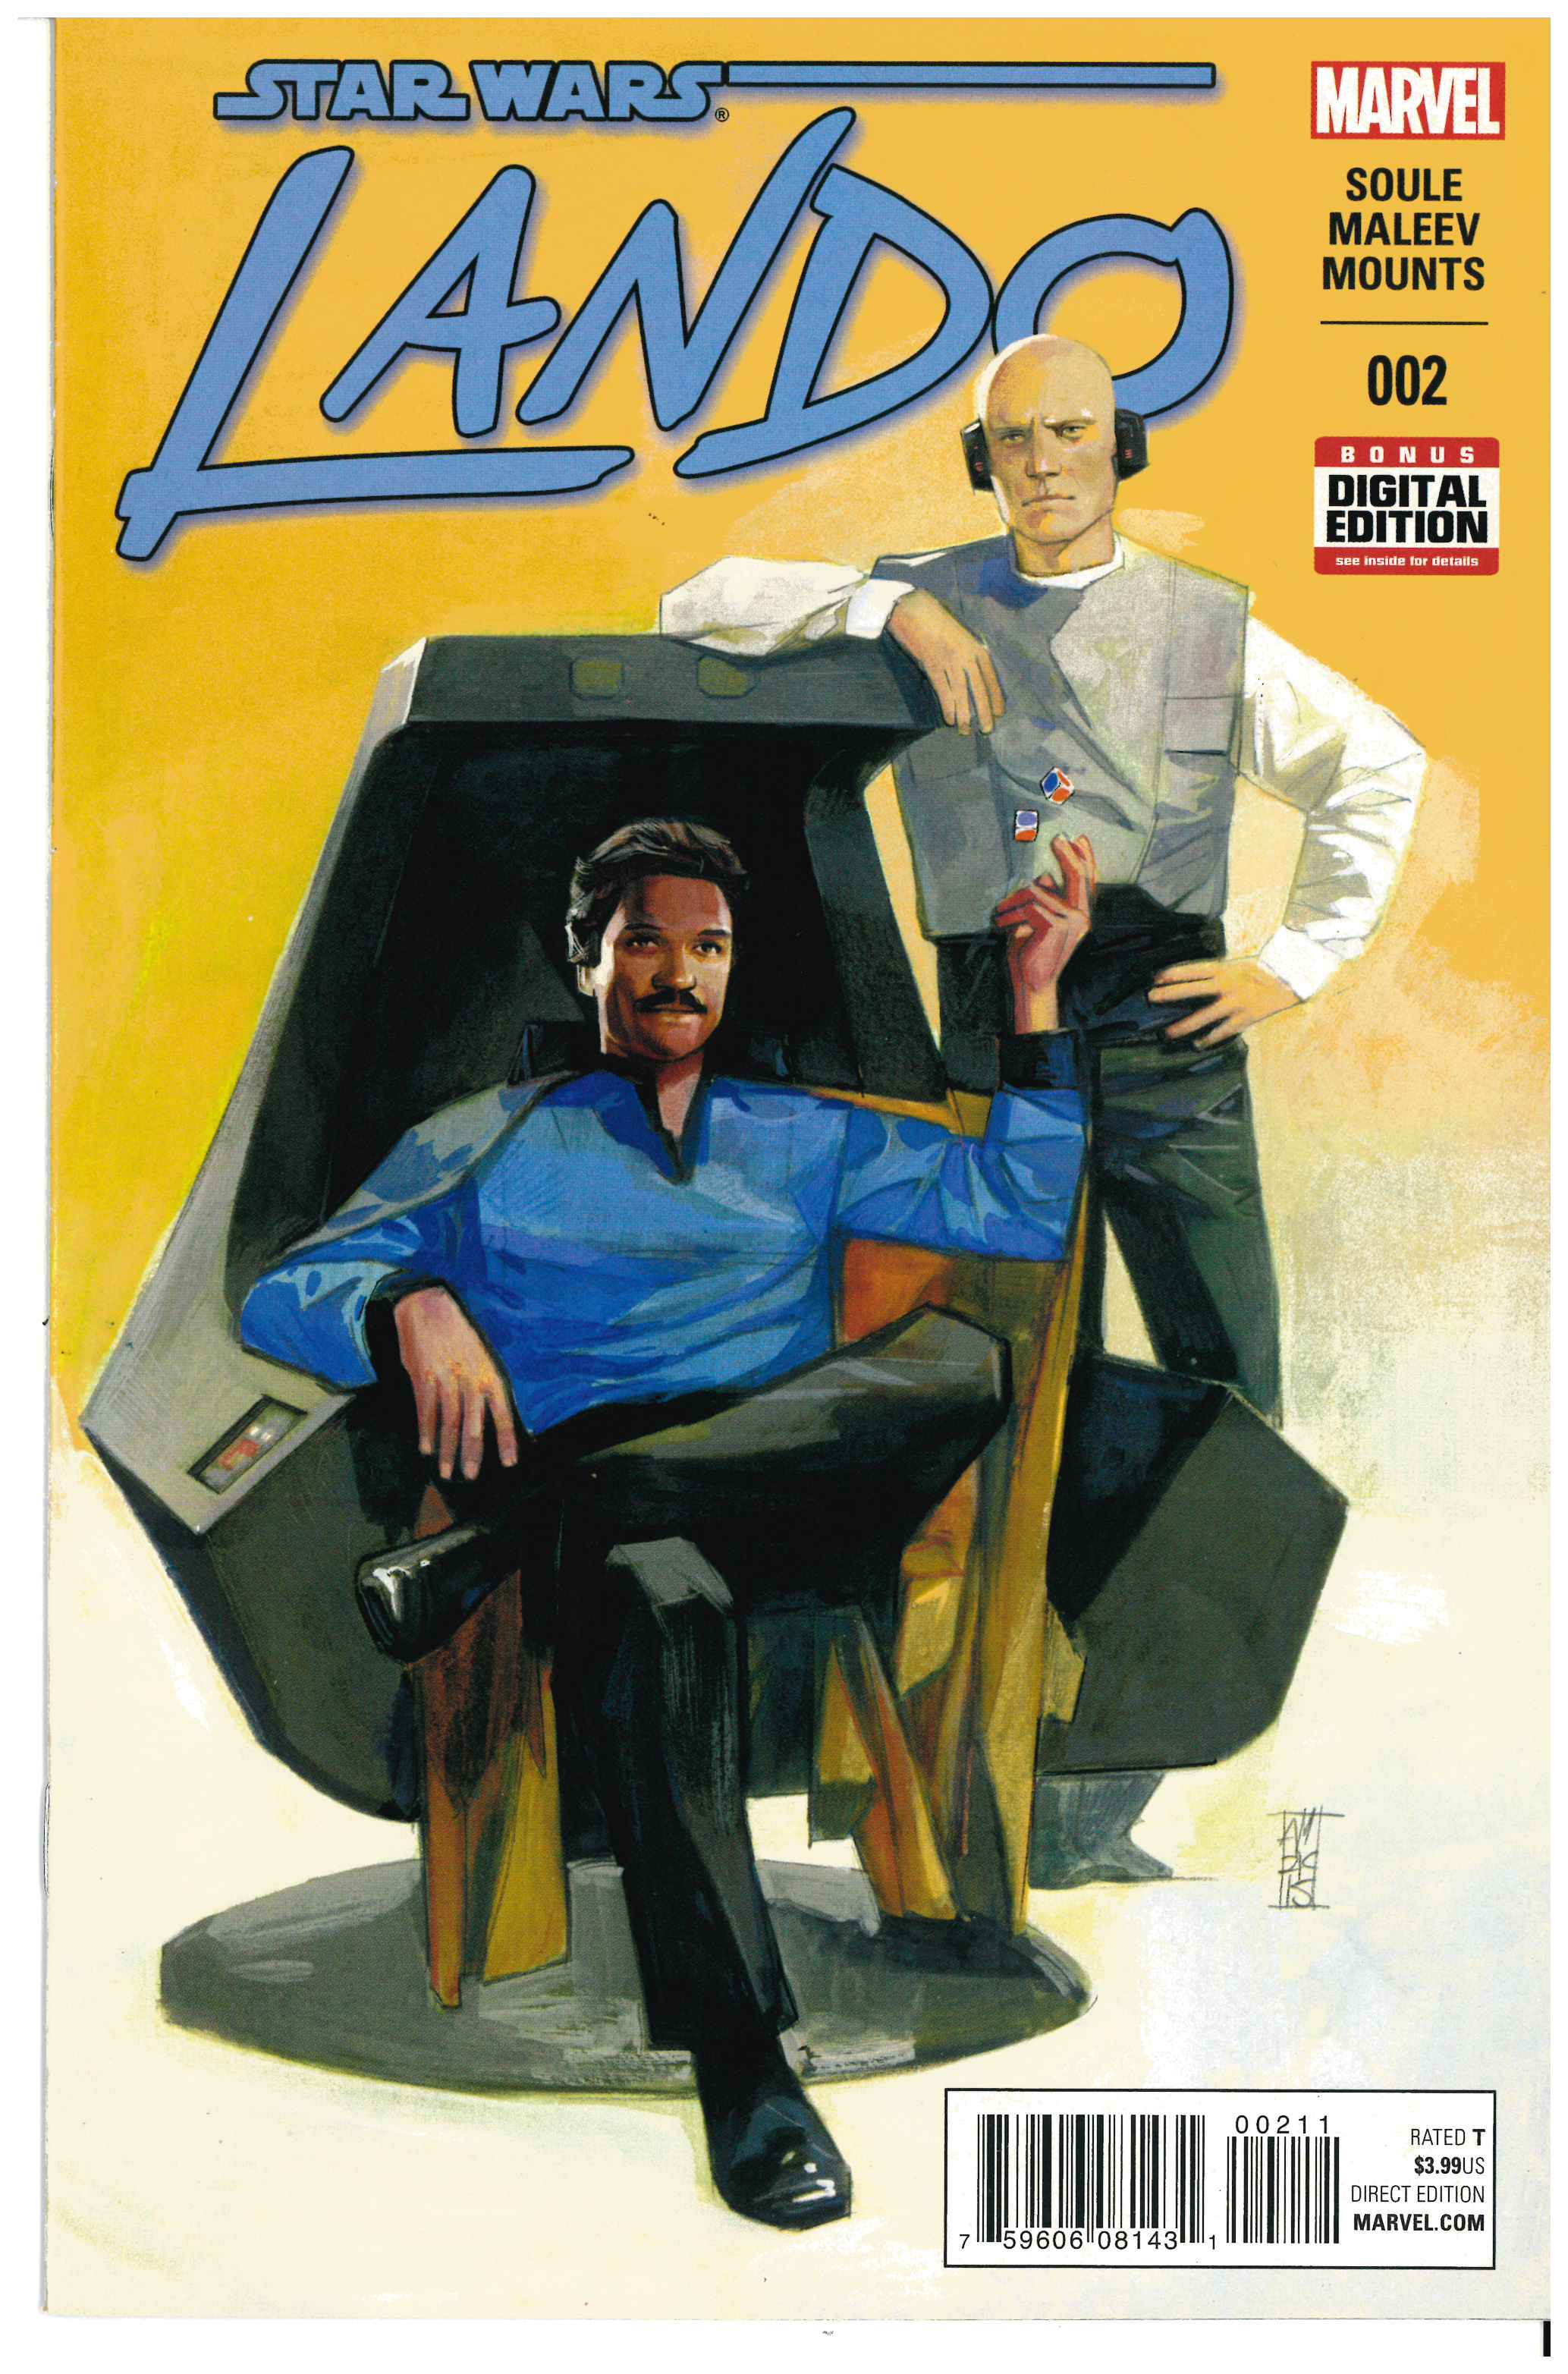 Star Wars: Lando #2